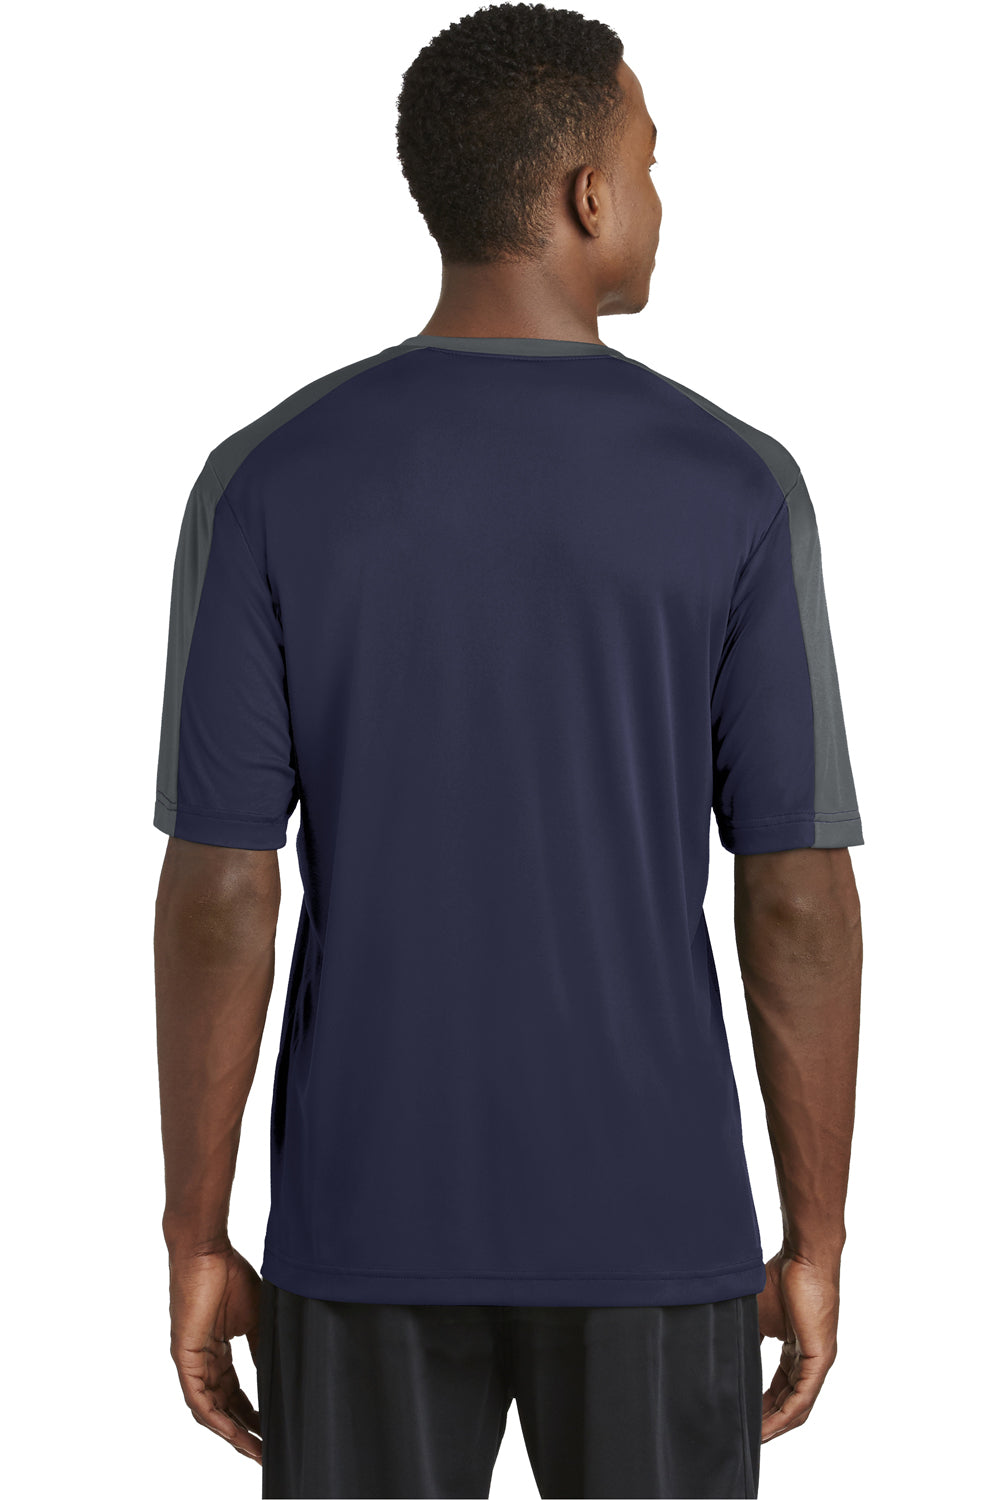 Sport-Tek ST354 Mens Competitor Moisture Wicking Short Sleeve Crewneck T-Shirt Navy Blue/Grey Back